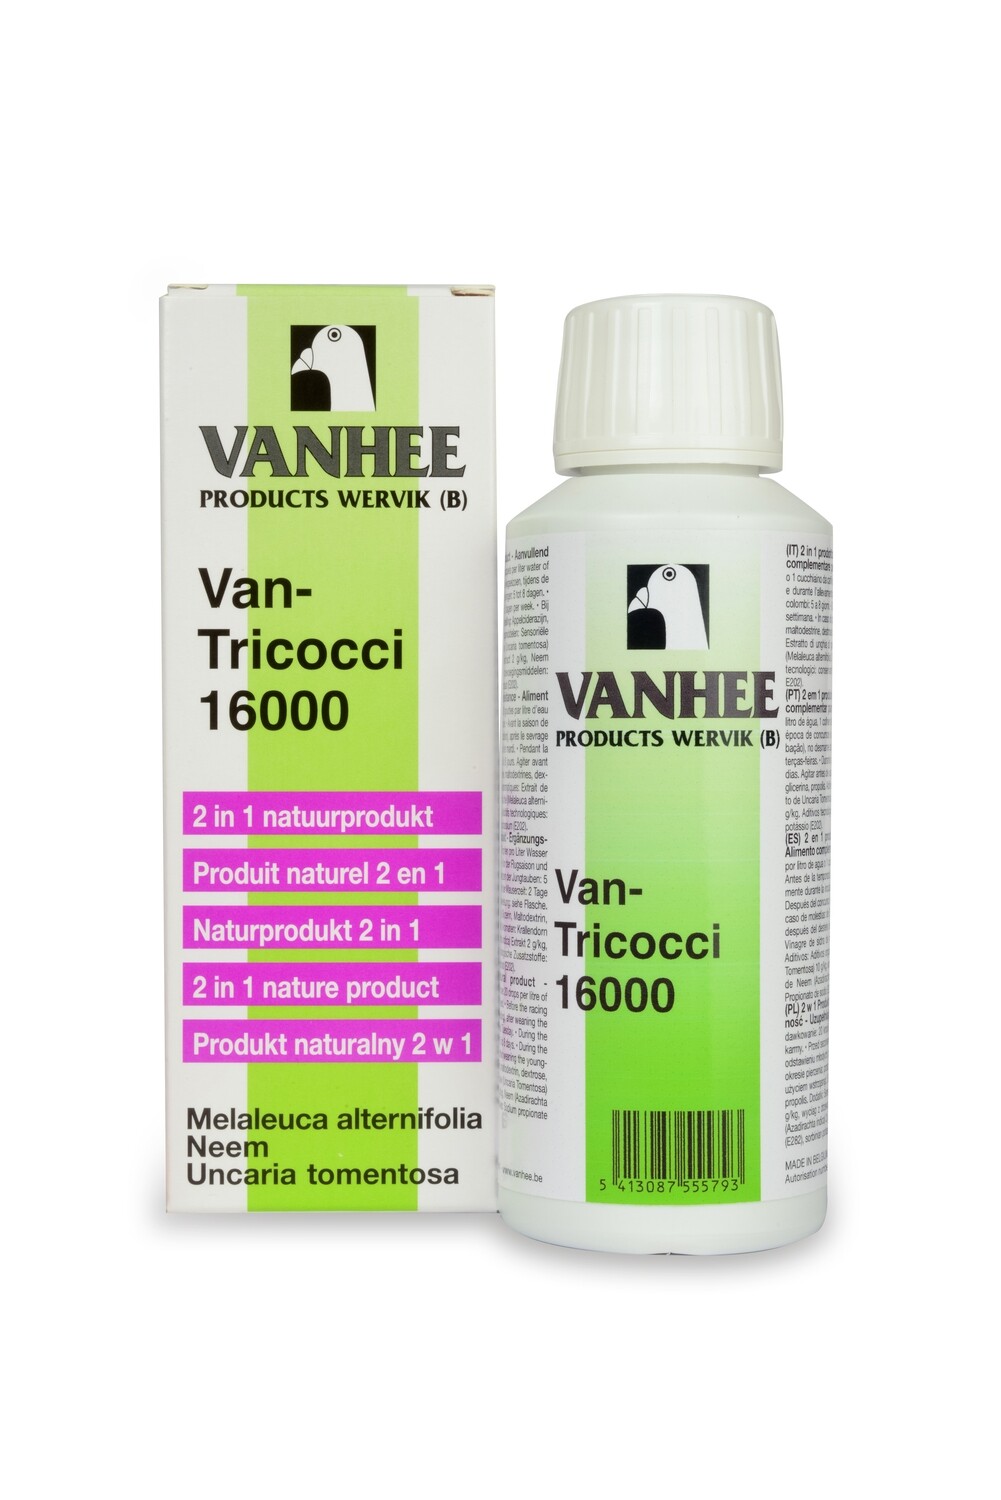 Van-Tricocci 16000